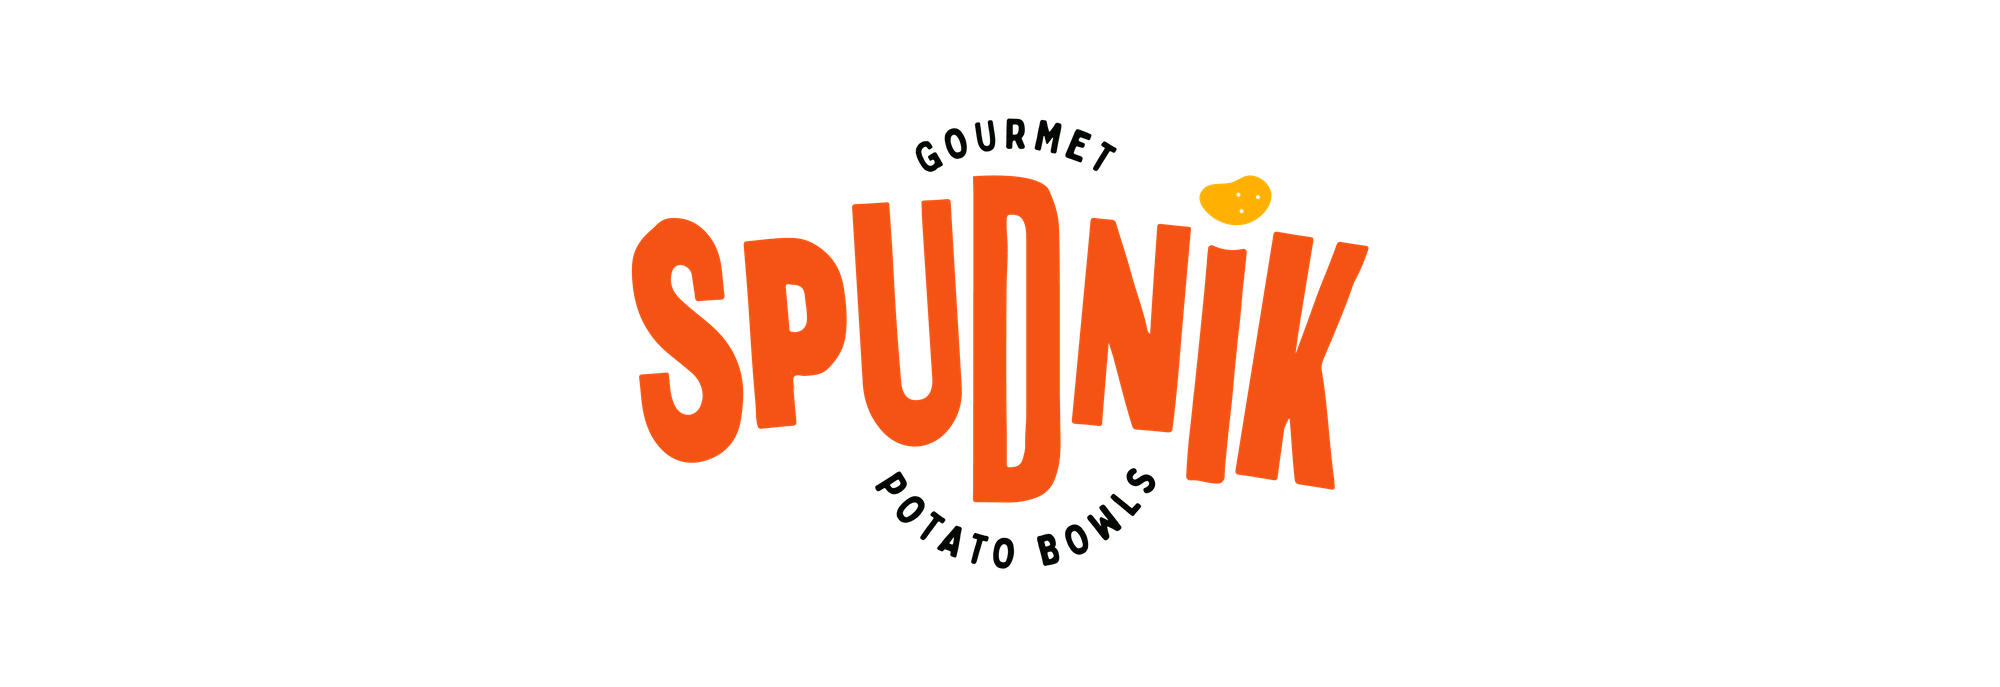 Spudnik土豆美食餐厅品牌设计